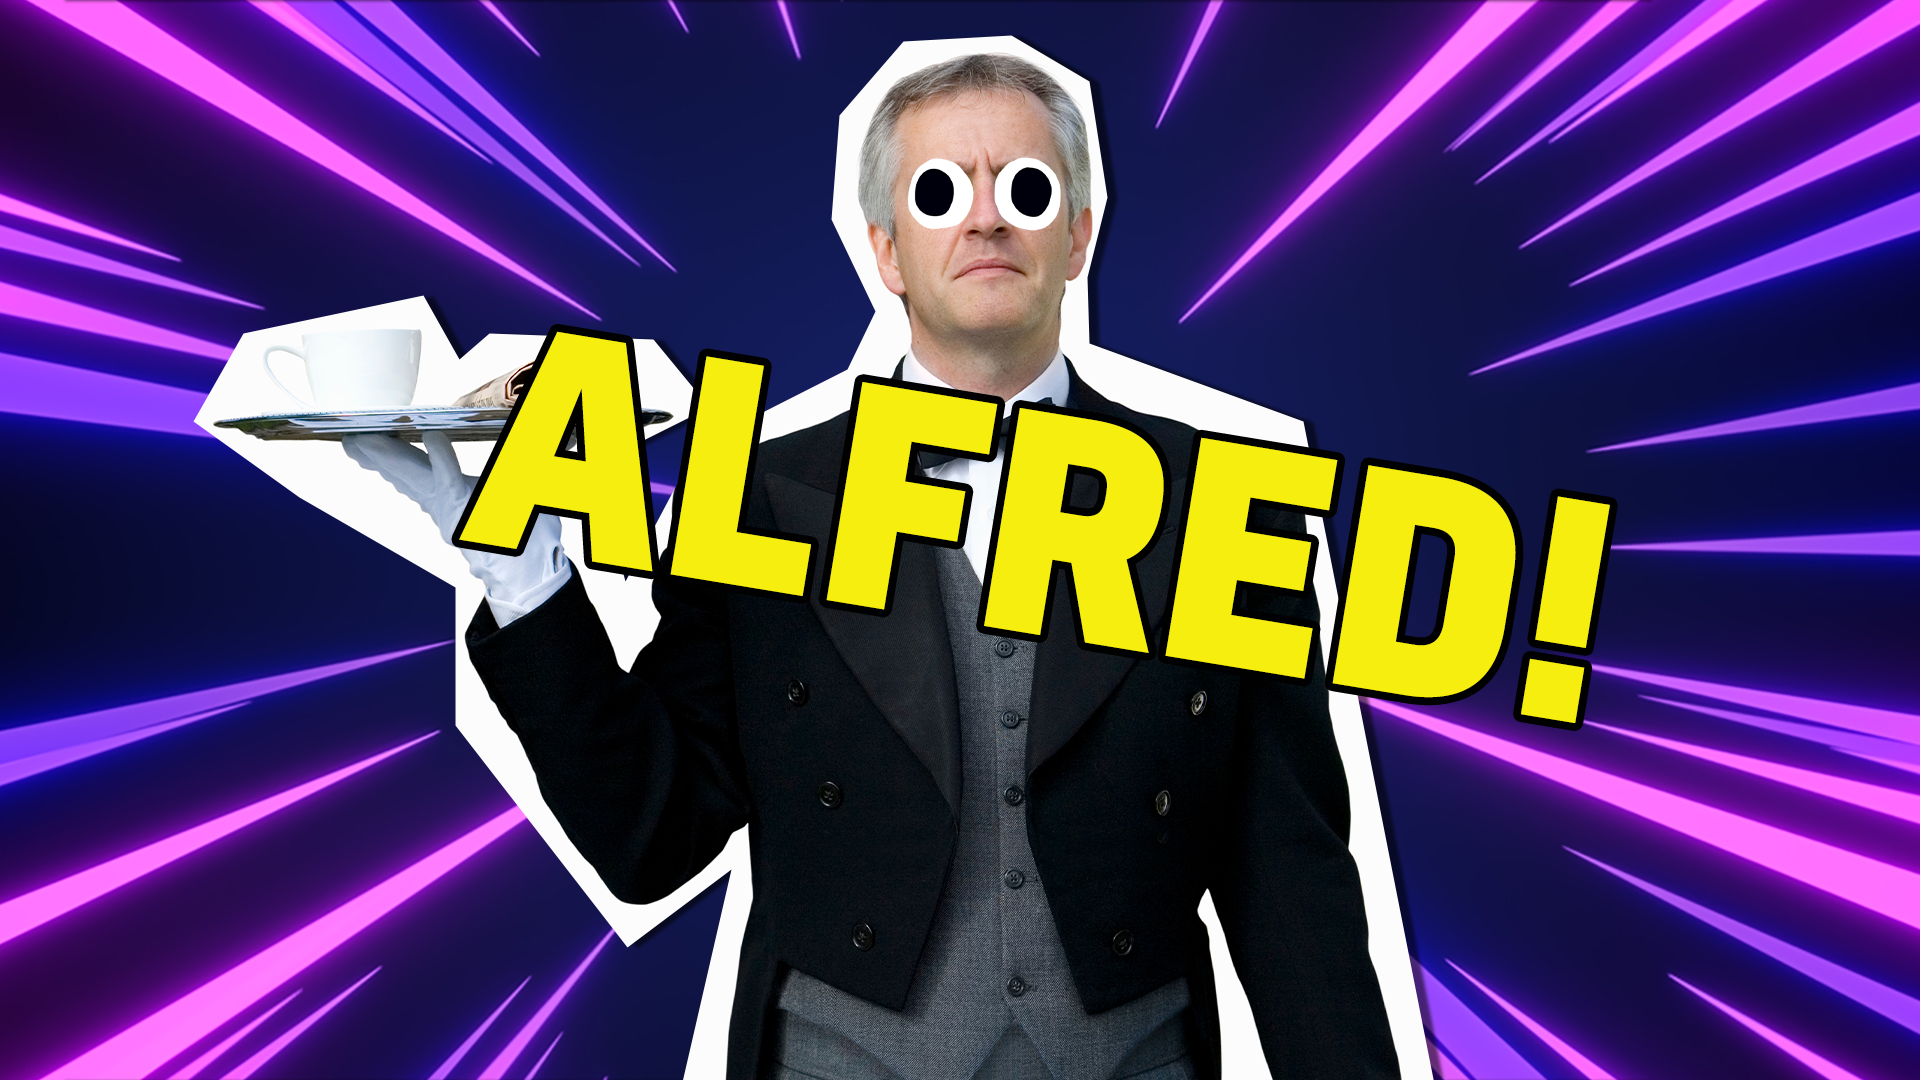 Alfred result